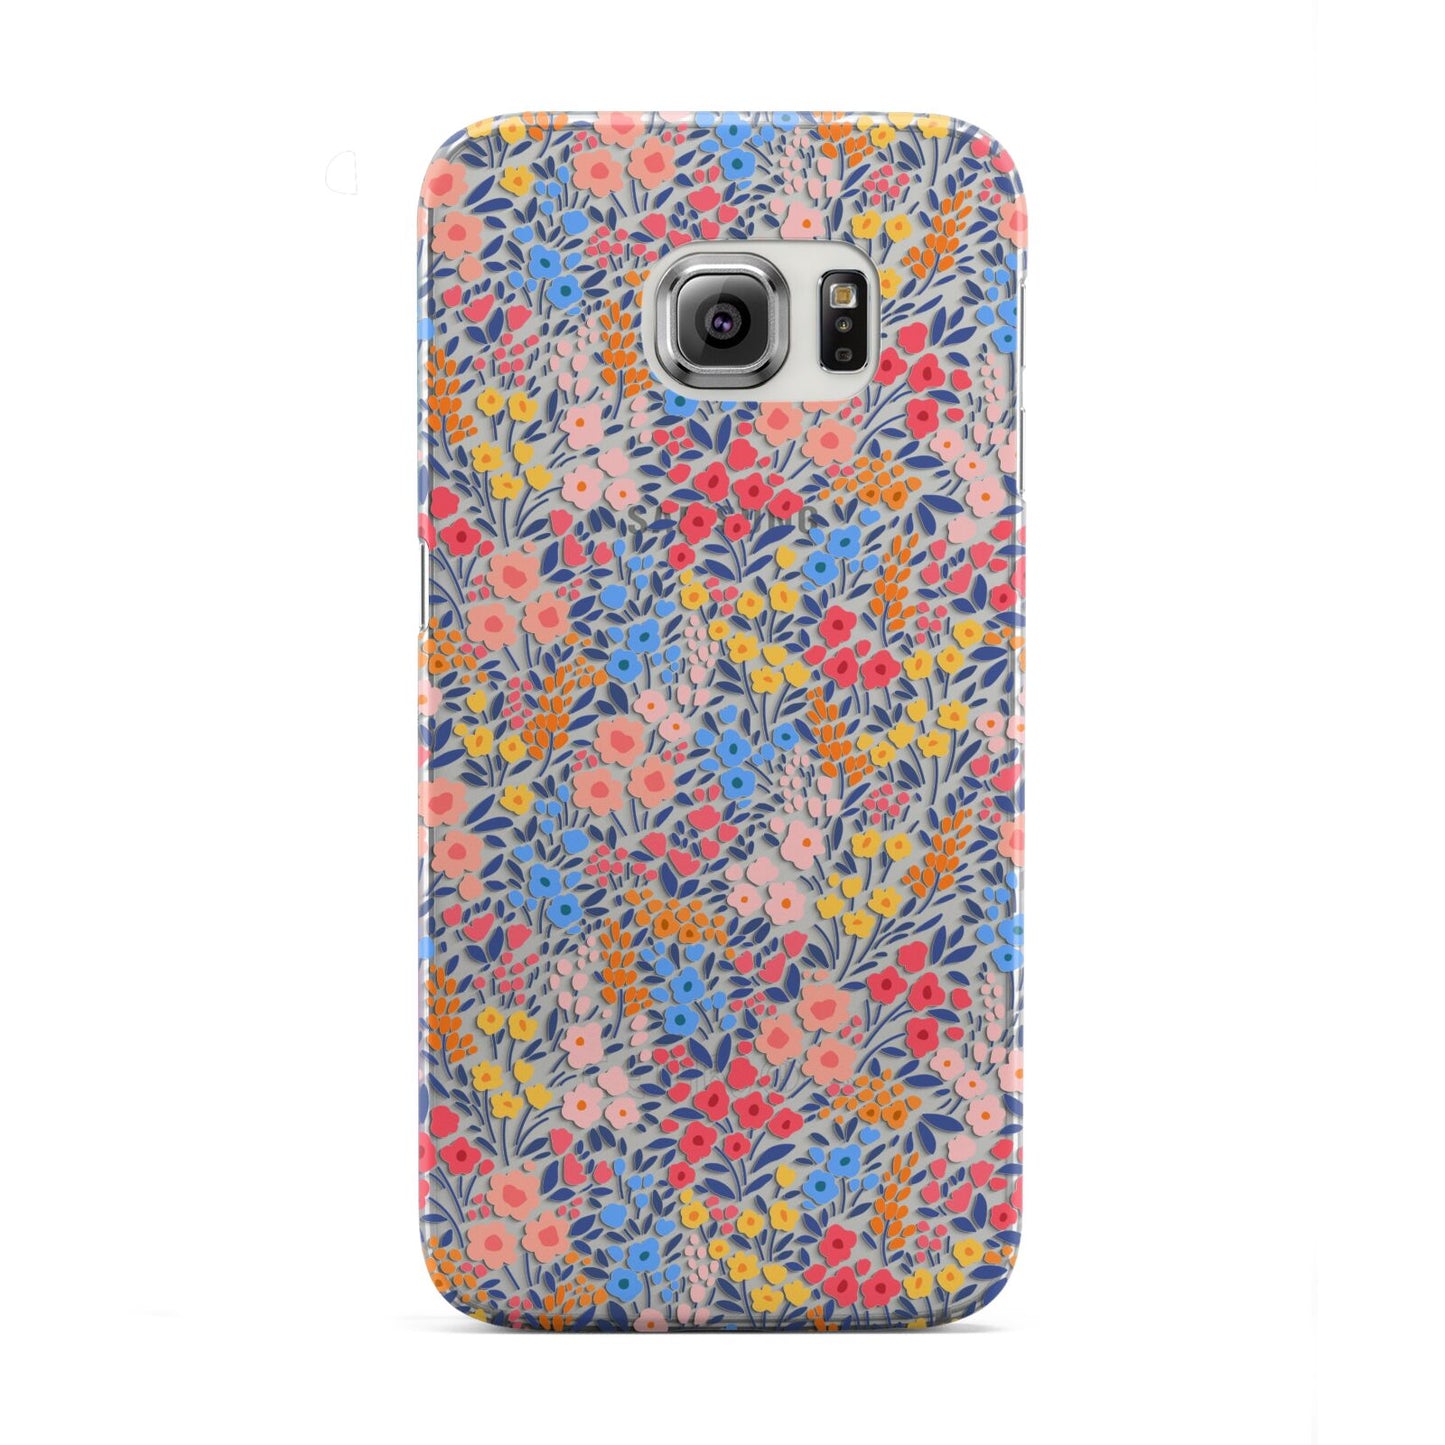 Small Flowers Samsung Galaxy S6 Edge Case